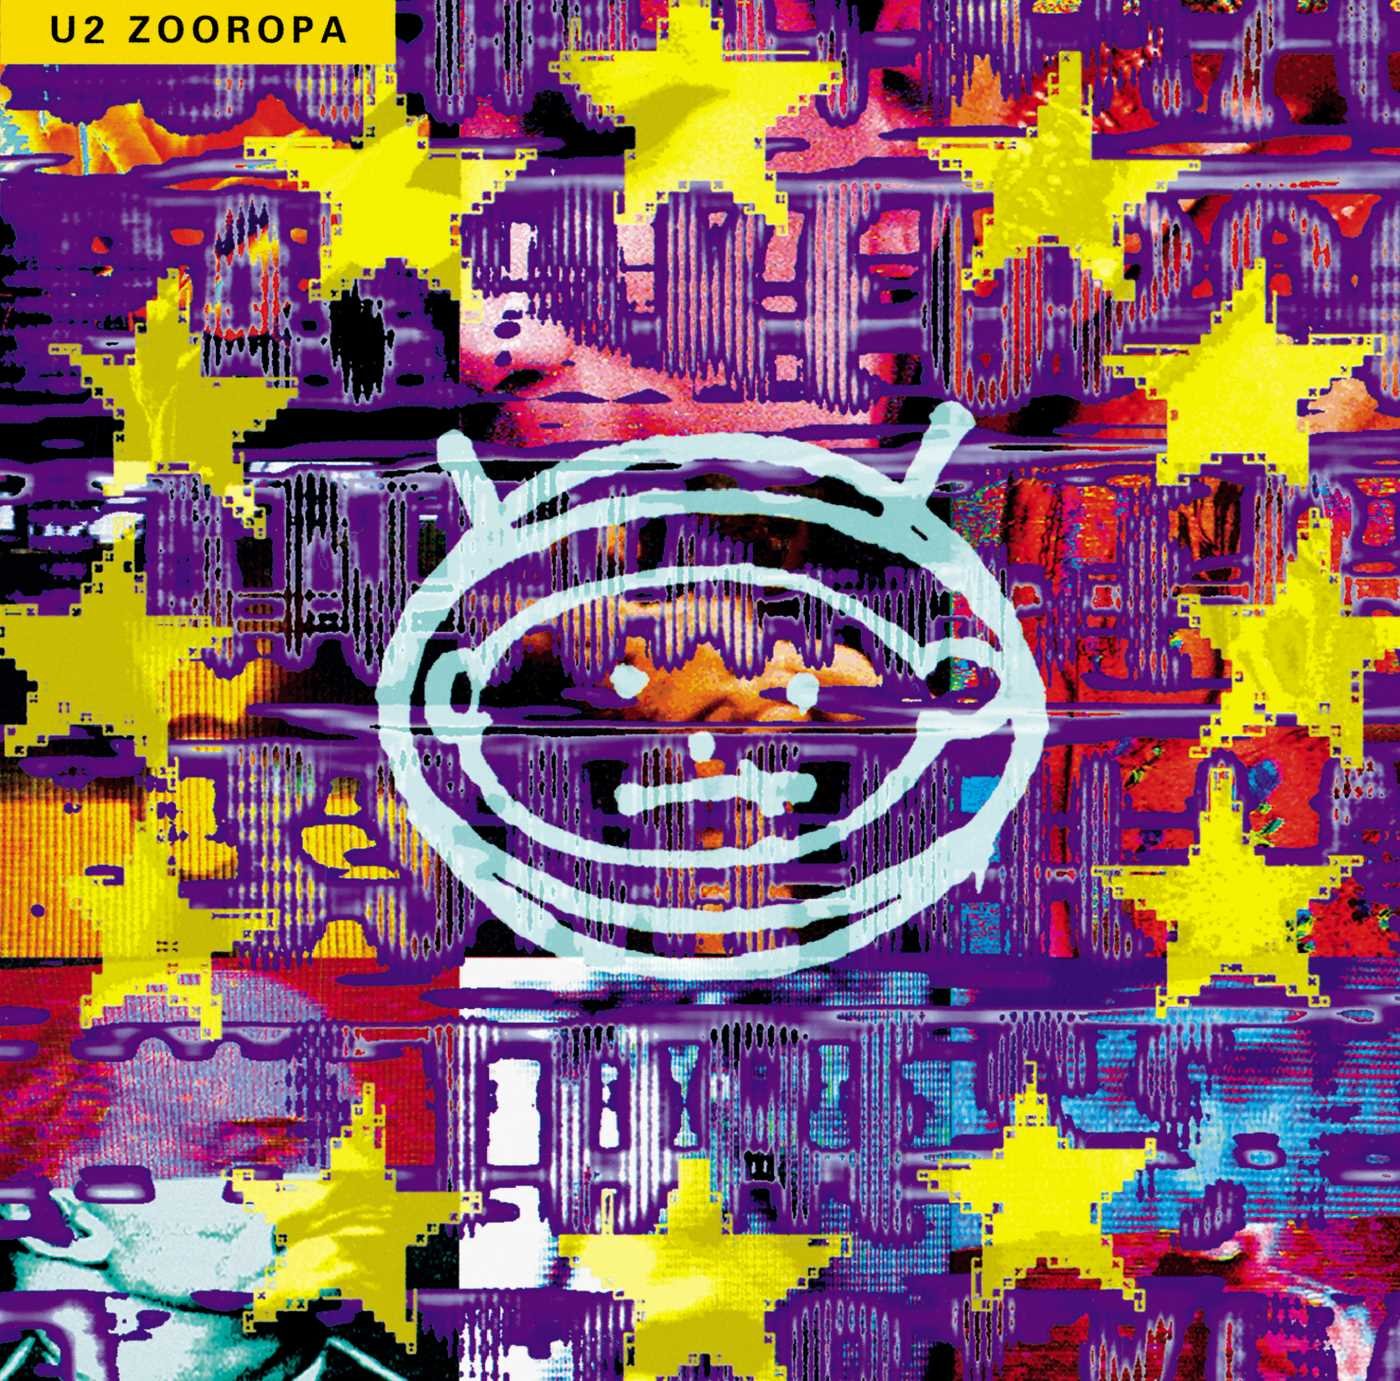 U2 "Zooropa" 2LP